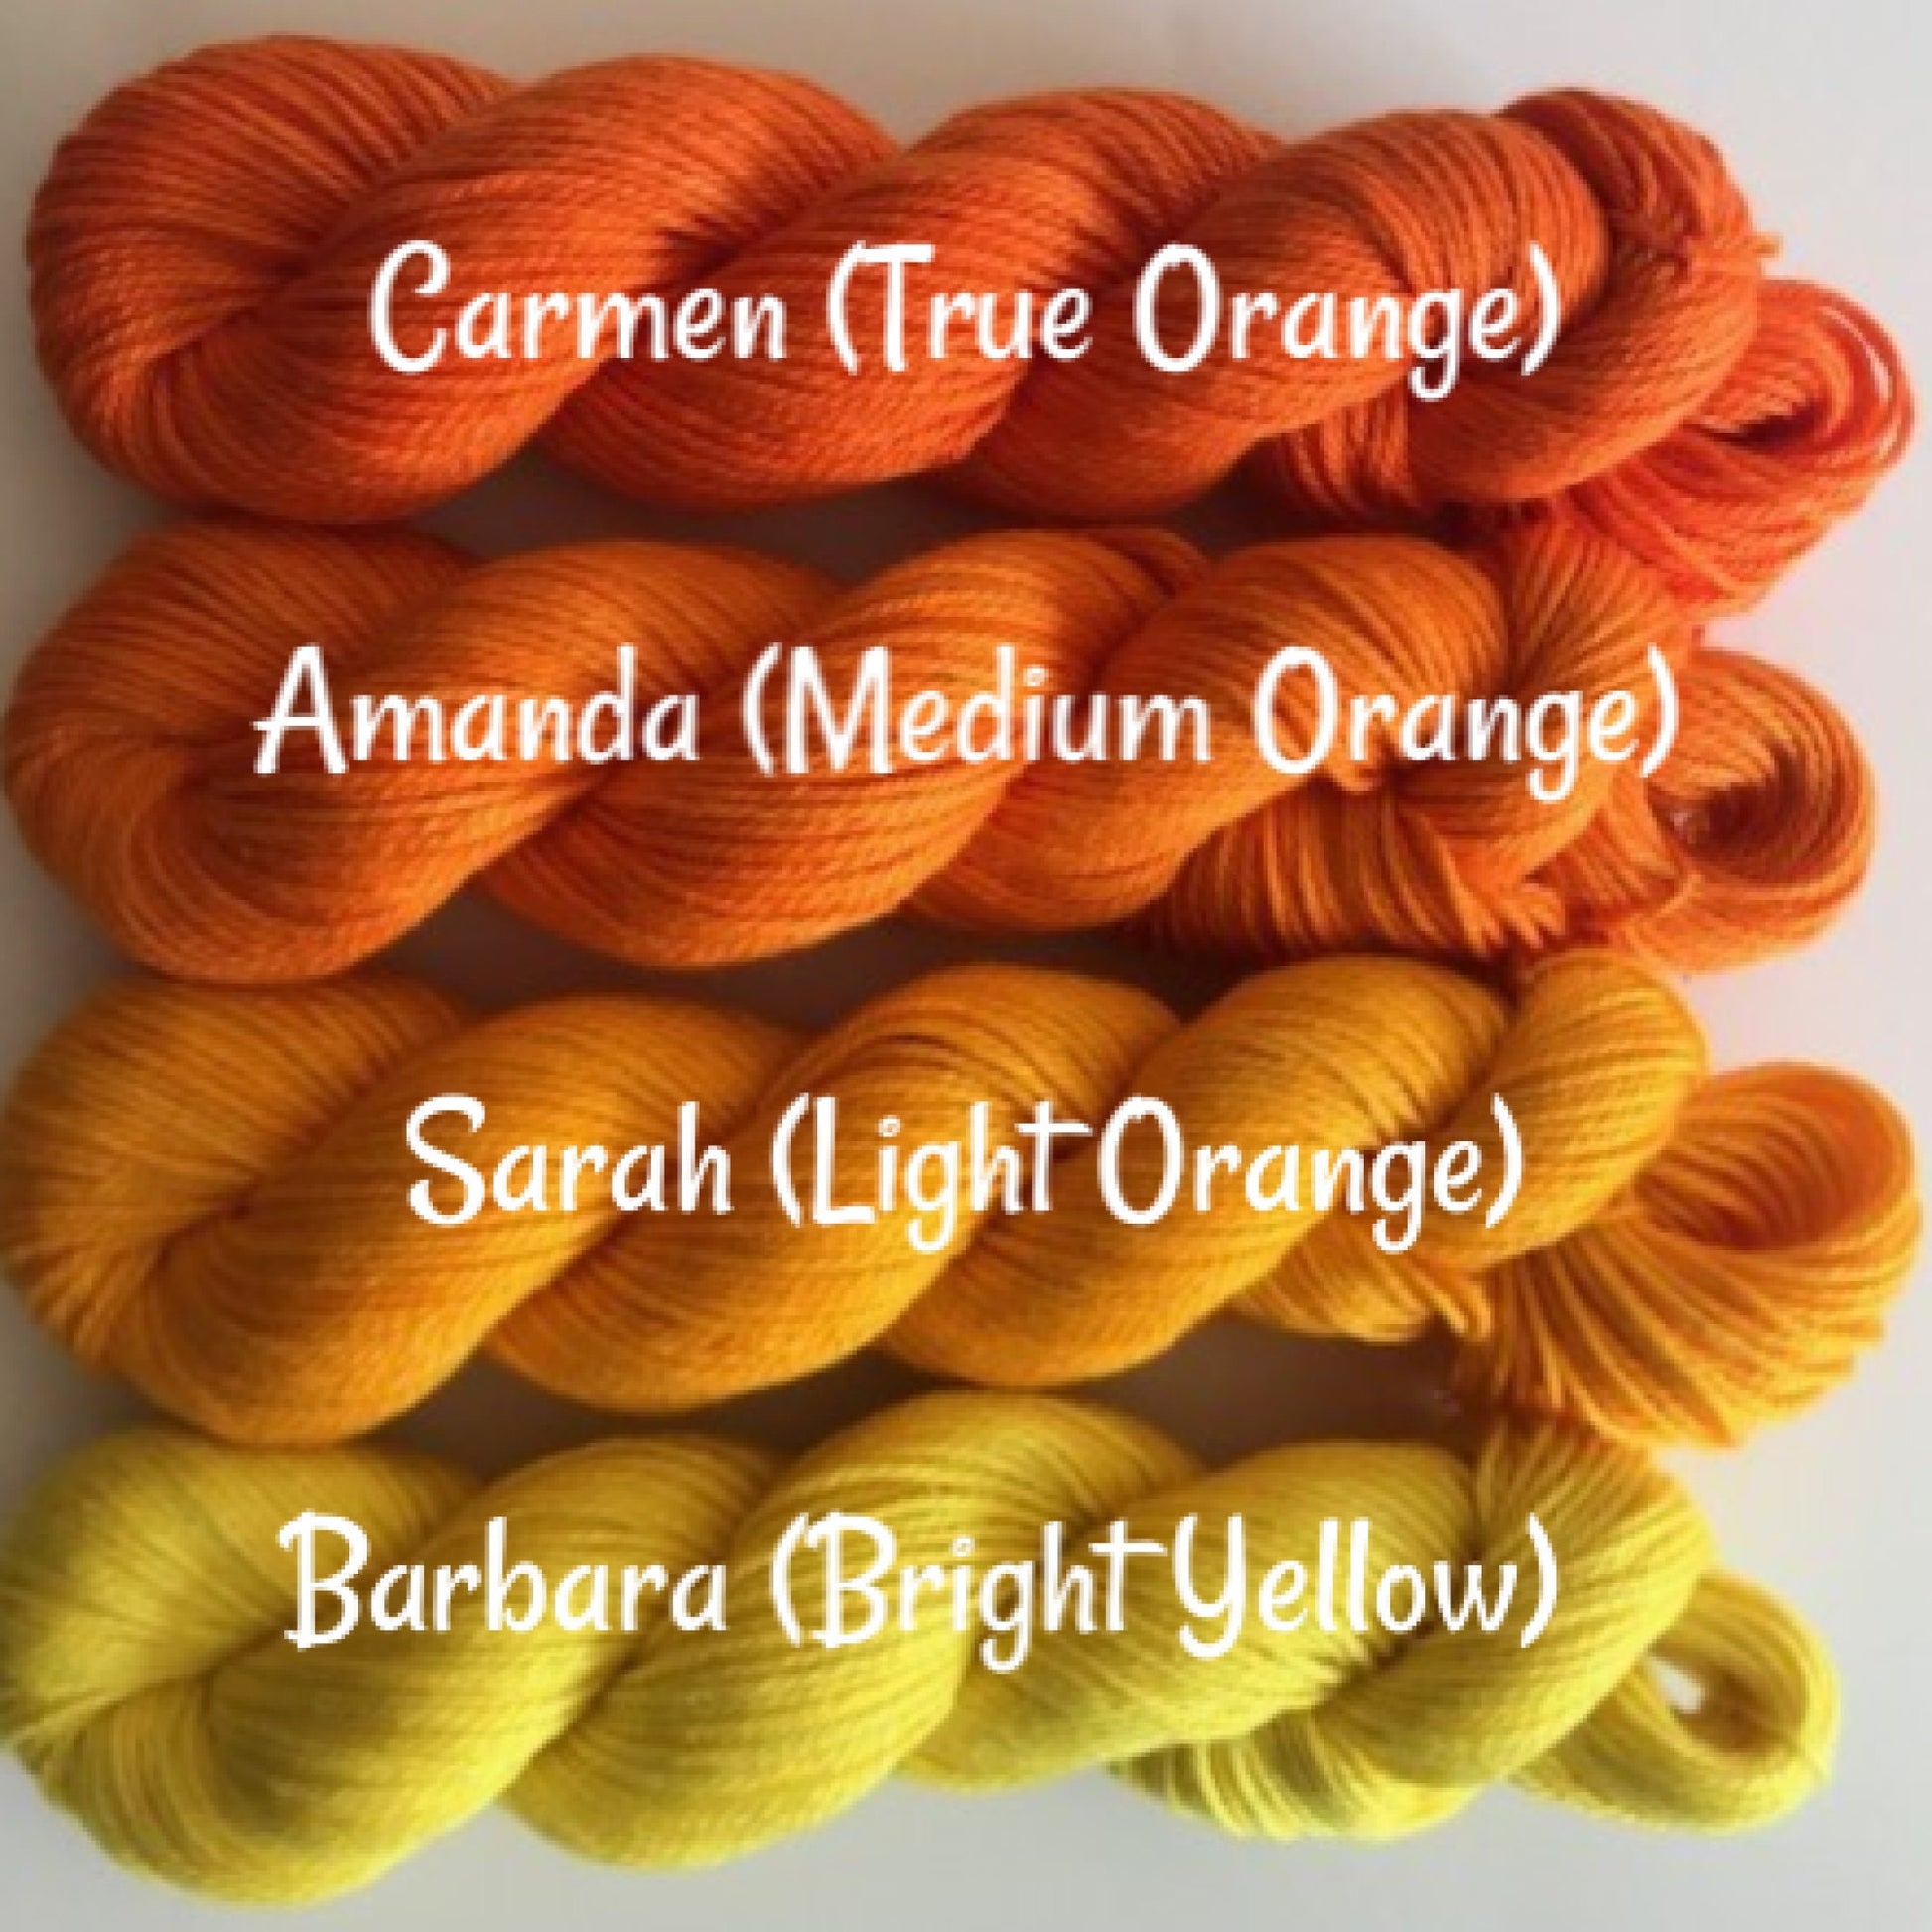 Vegan Sock / Fingering Yarn - Hand Dyed Bamboo Cotton - Choose Color & Skein Size - Light, Medium, and Deep Orange and Yellow - Artisan Yarn